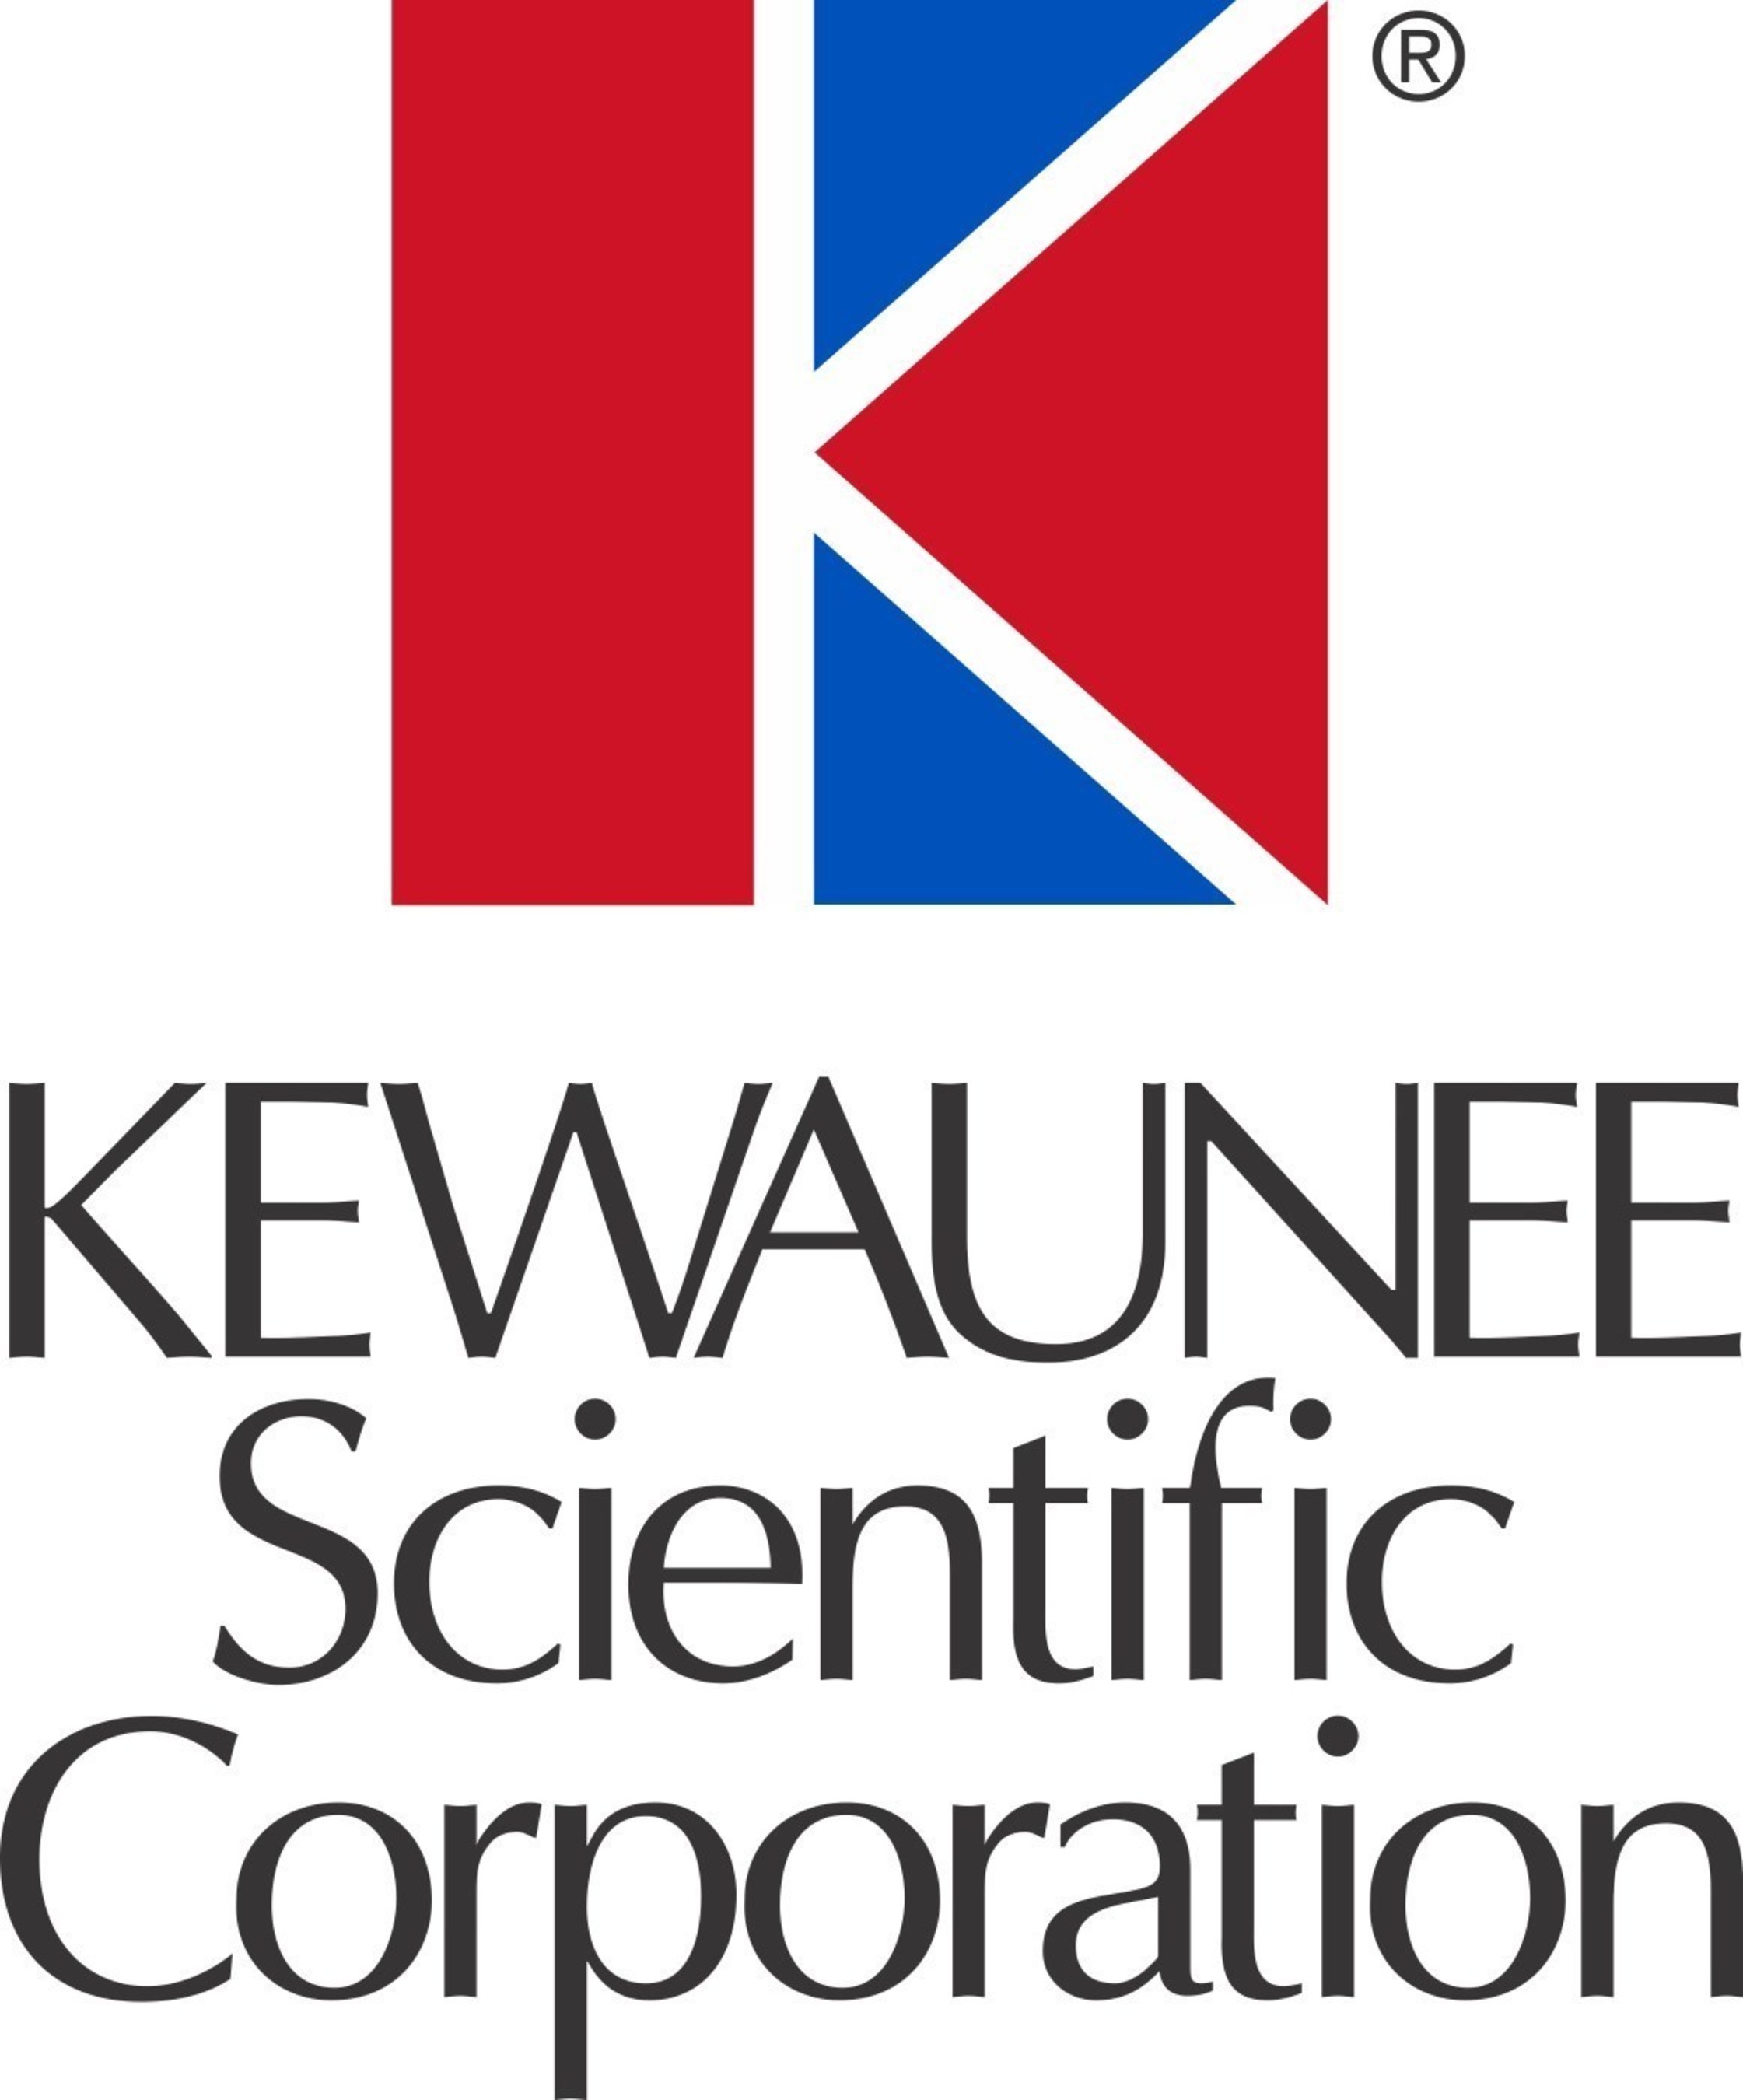 Kewaunee Scientific Corporation (PRNewsFoto/Kewaunee Scientific Corporation)